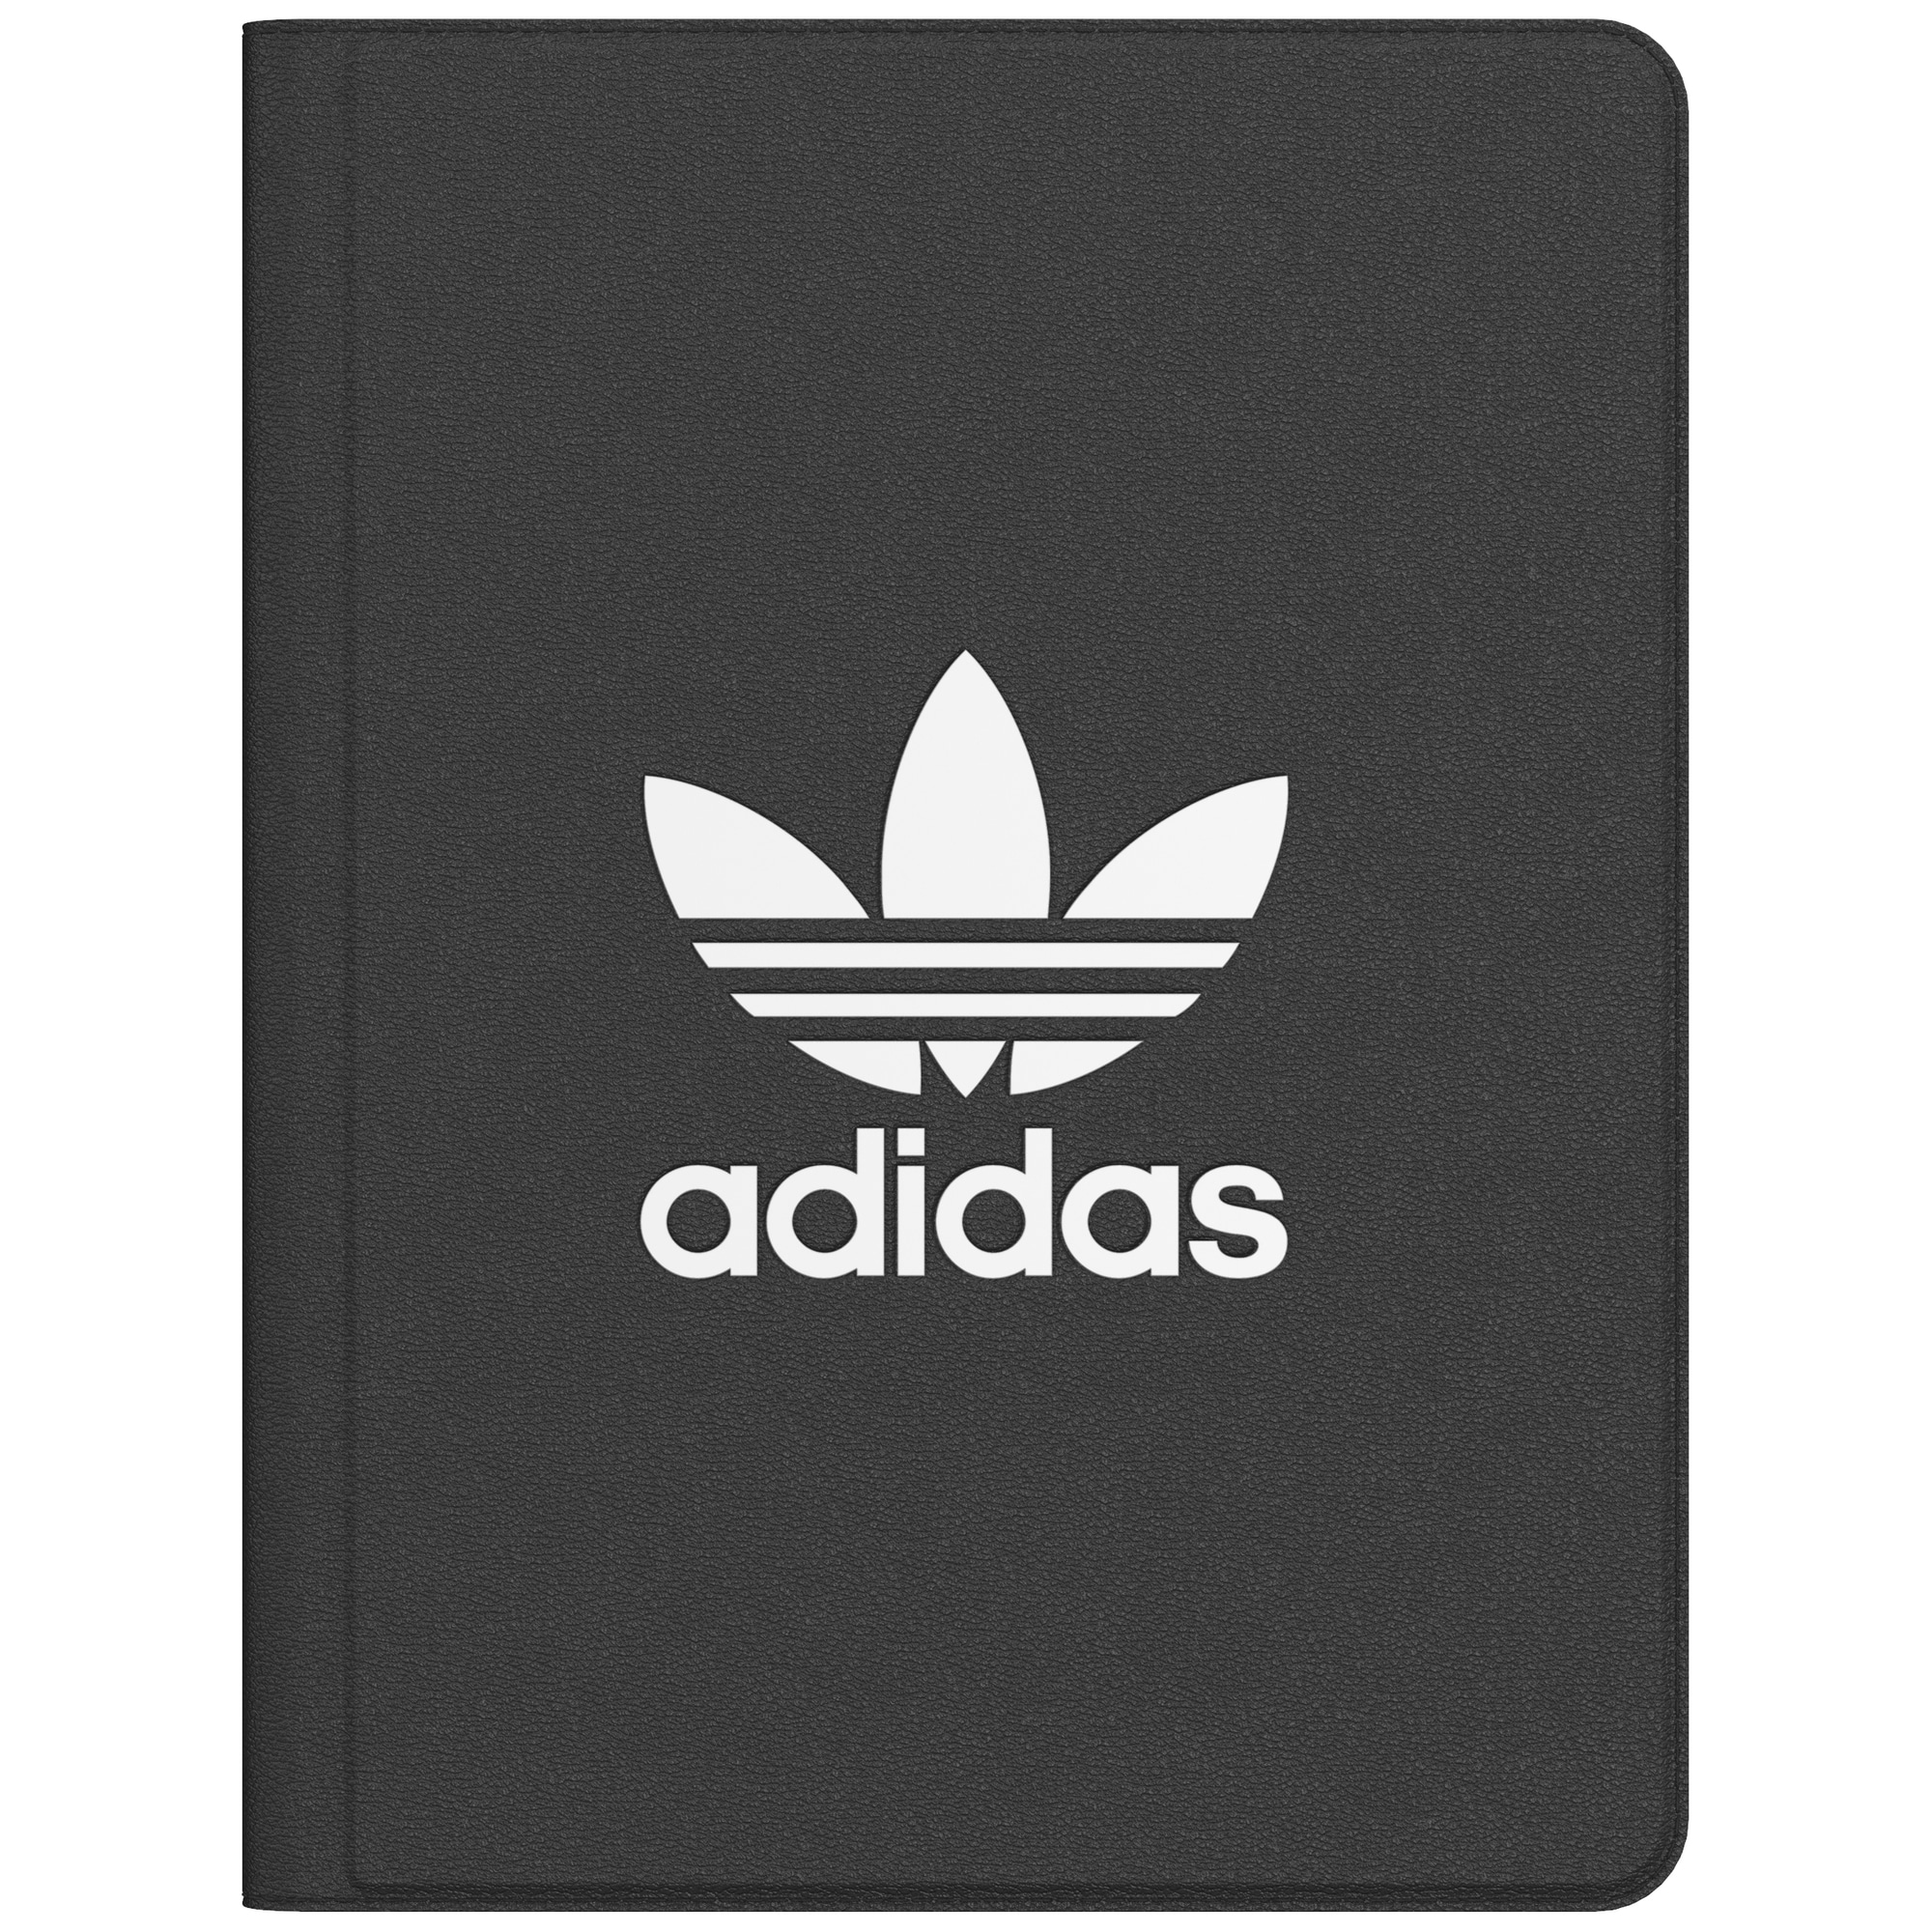 Adidas Originals folio-fodral till iPad 9.7 (svart/vit) - Elgiganten